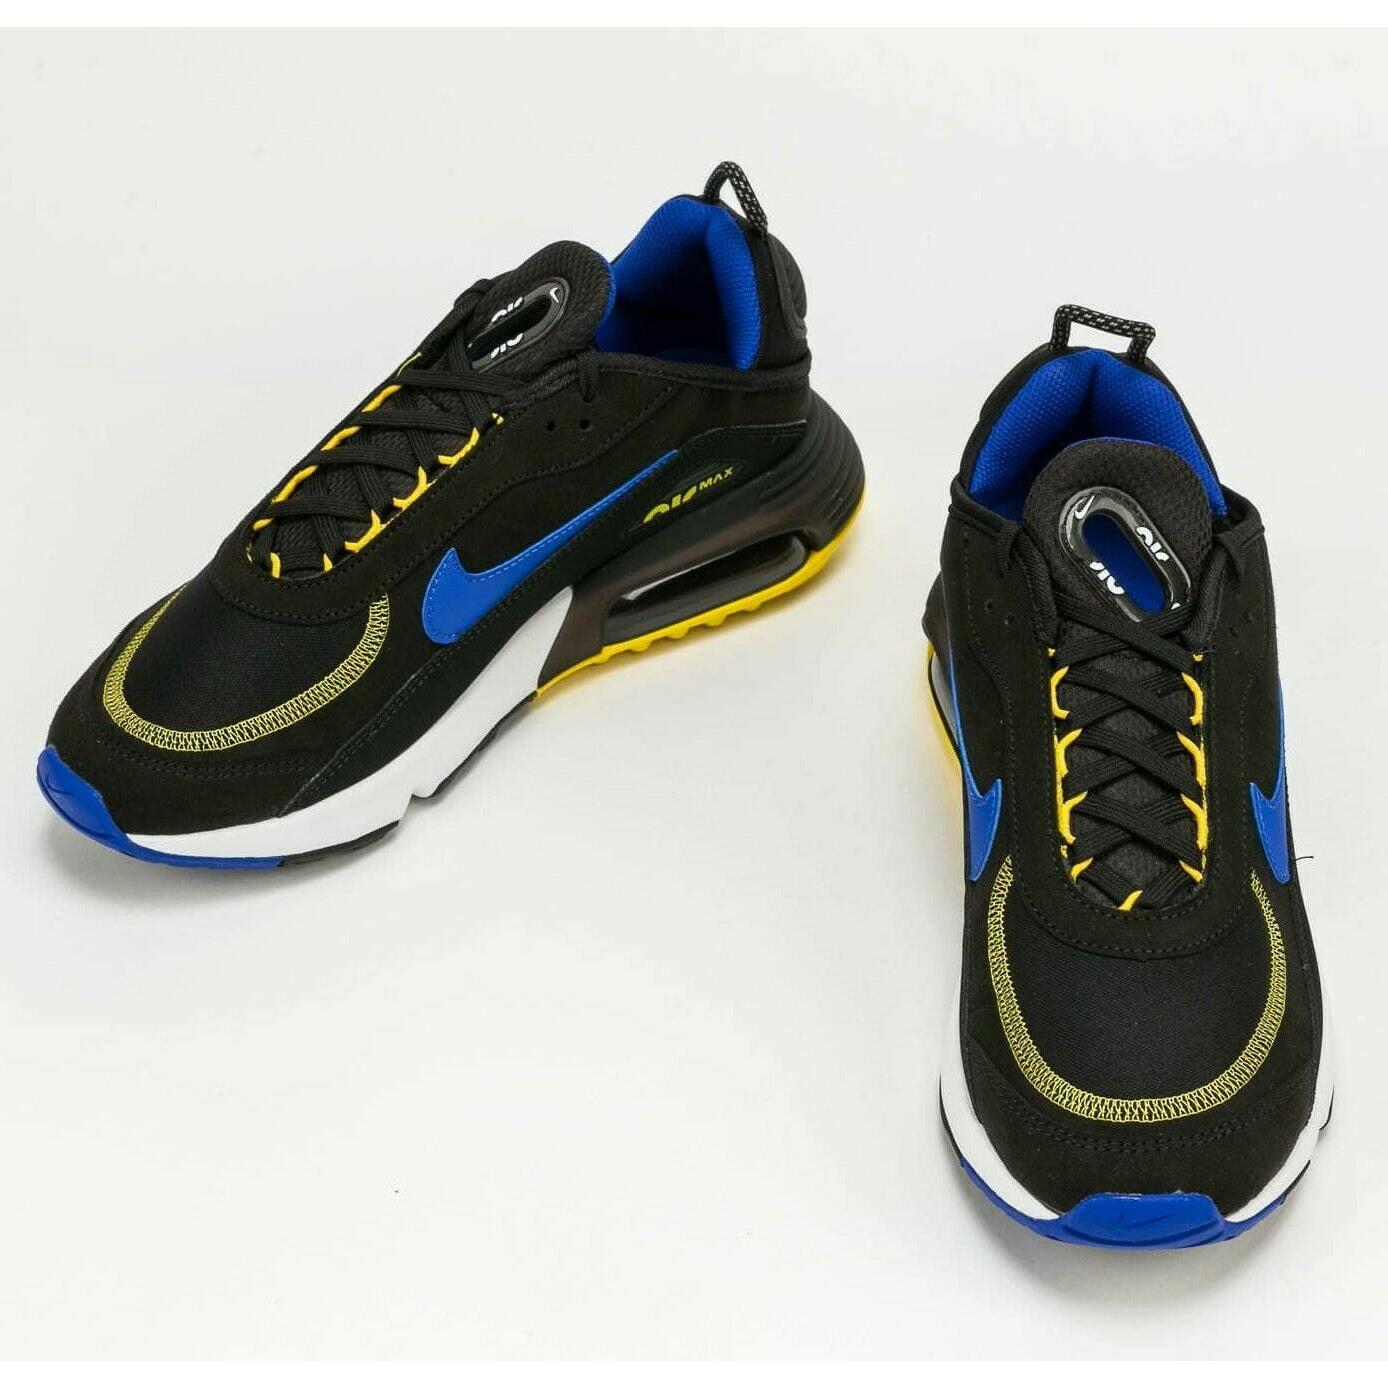 Nike Air Max 2090 C/s Black Hyper Blue Yellow DH7708-005 Airmax Shoes Sneakers